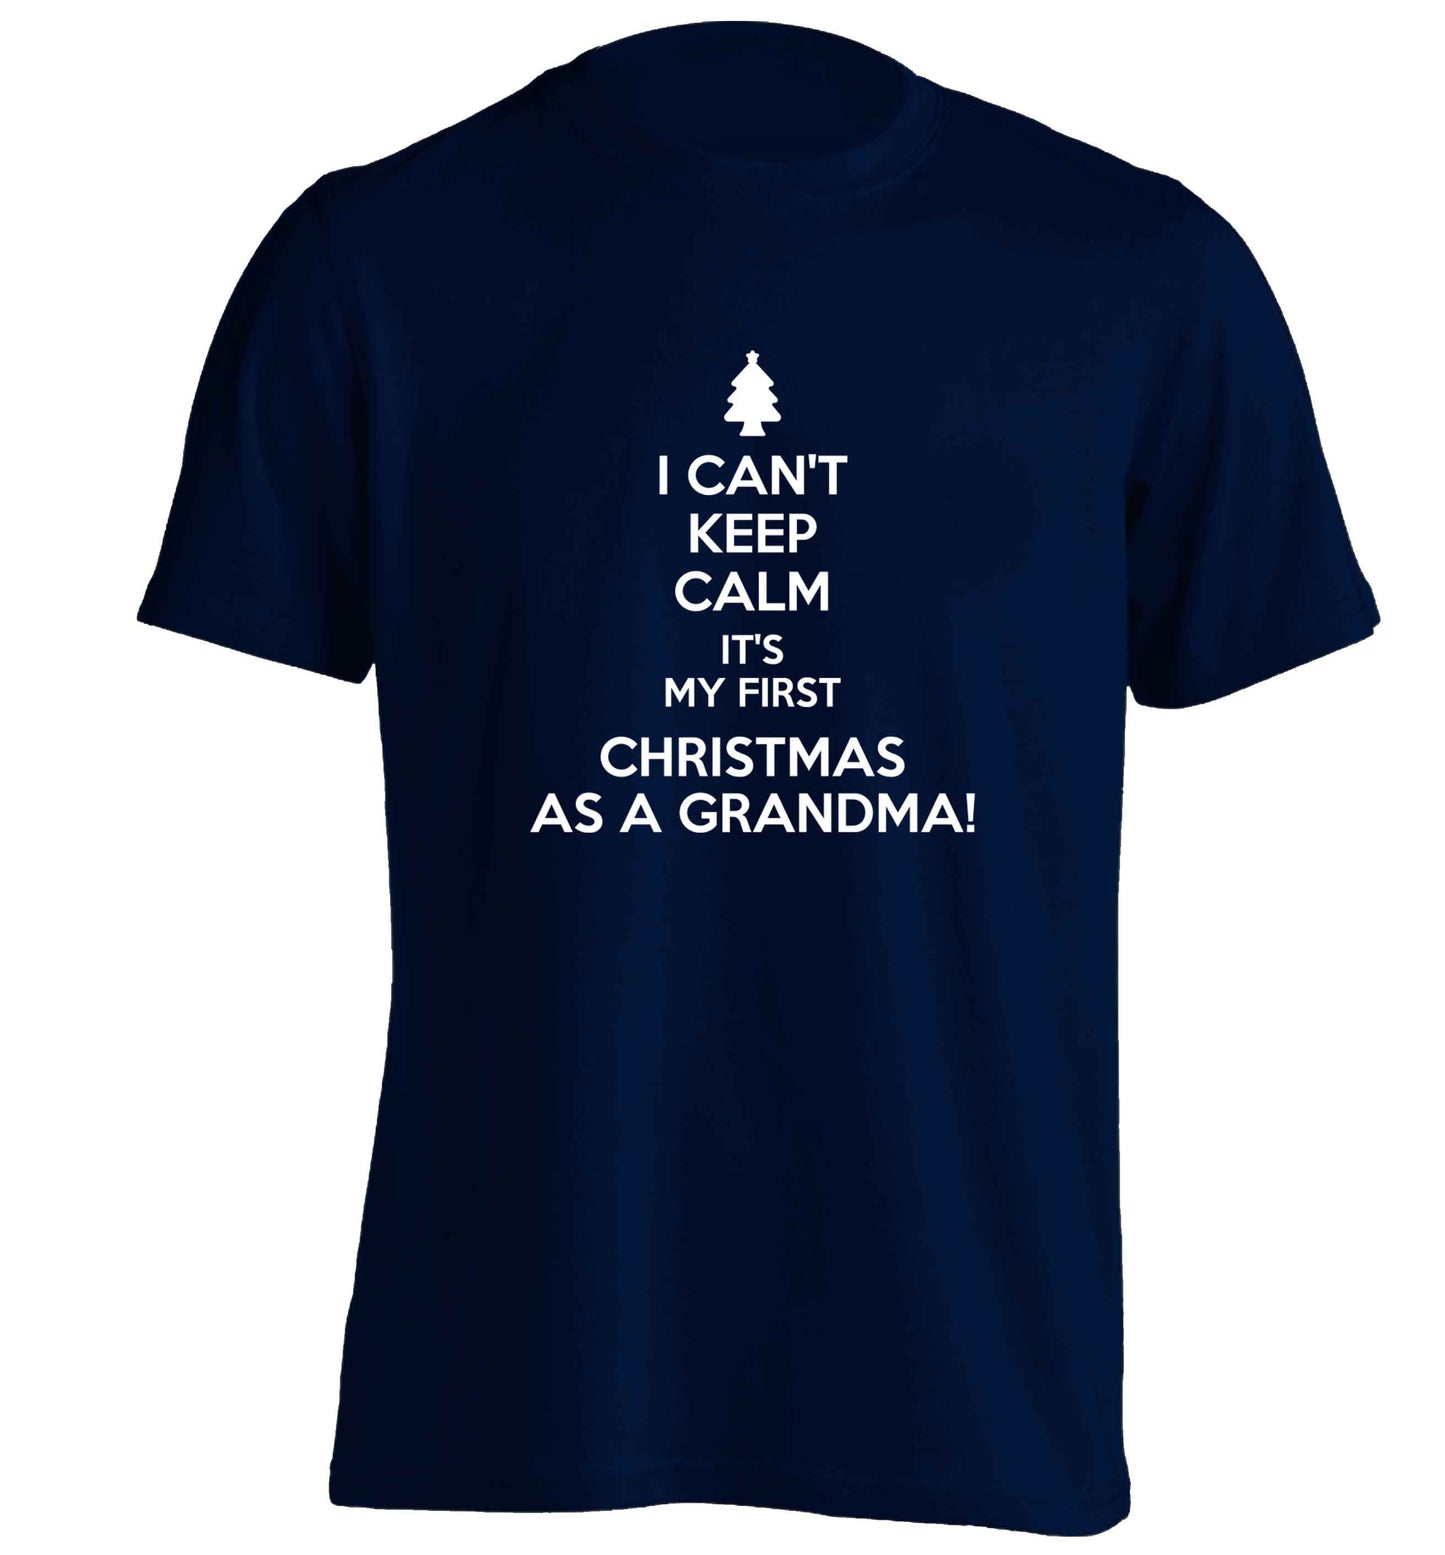 I can't keep calm it's my first Christmas as a grandma! adults unisex navy Tshirt 2XL